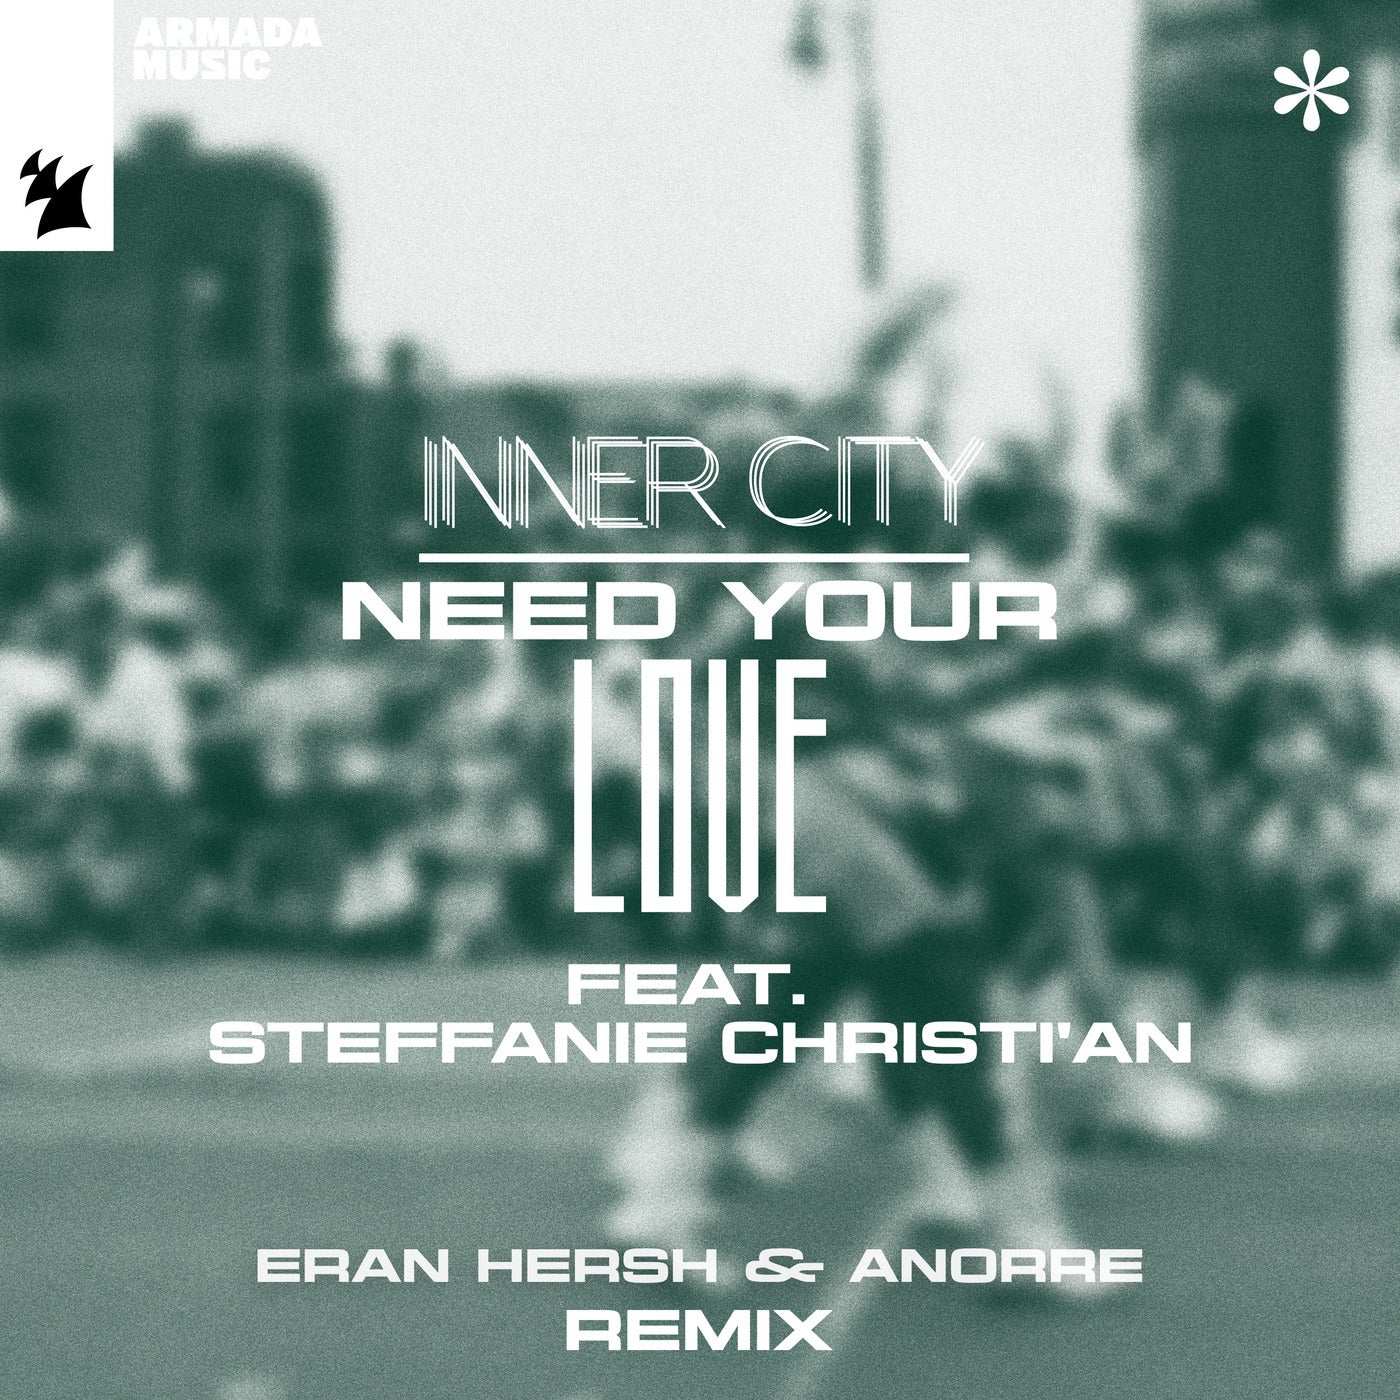 image cover: Inner City, Steffanie Christi'an - Need Your Love - Eran Hersh & Anorre Remix on Armada Music